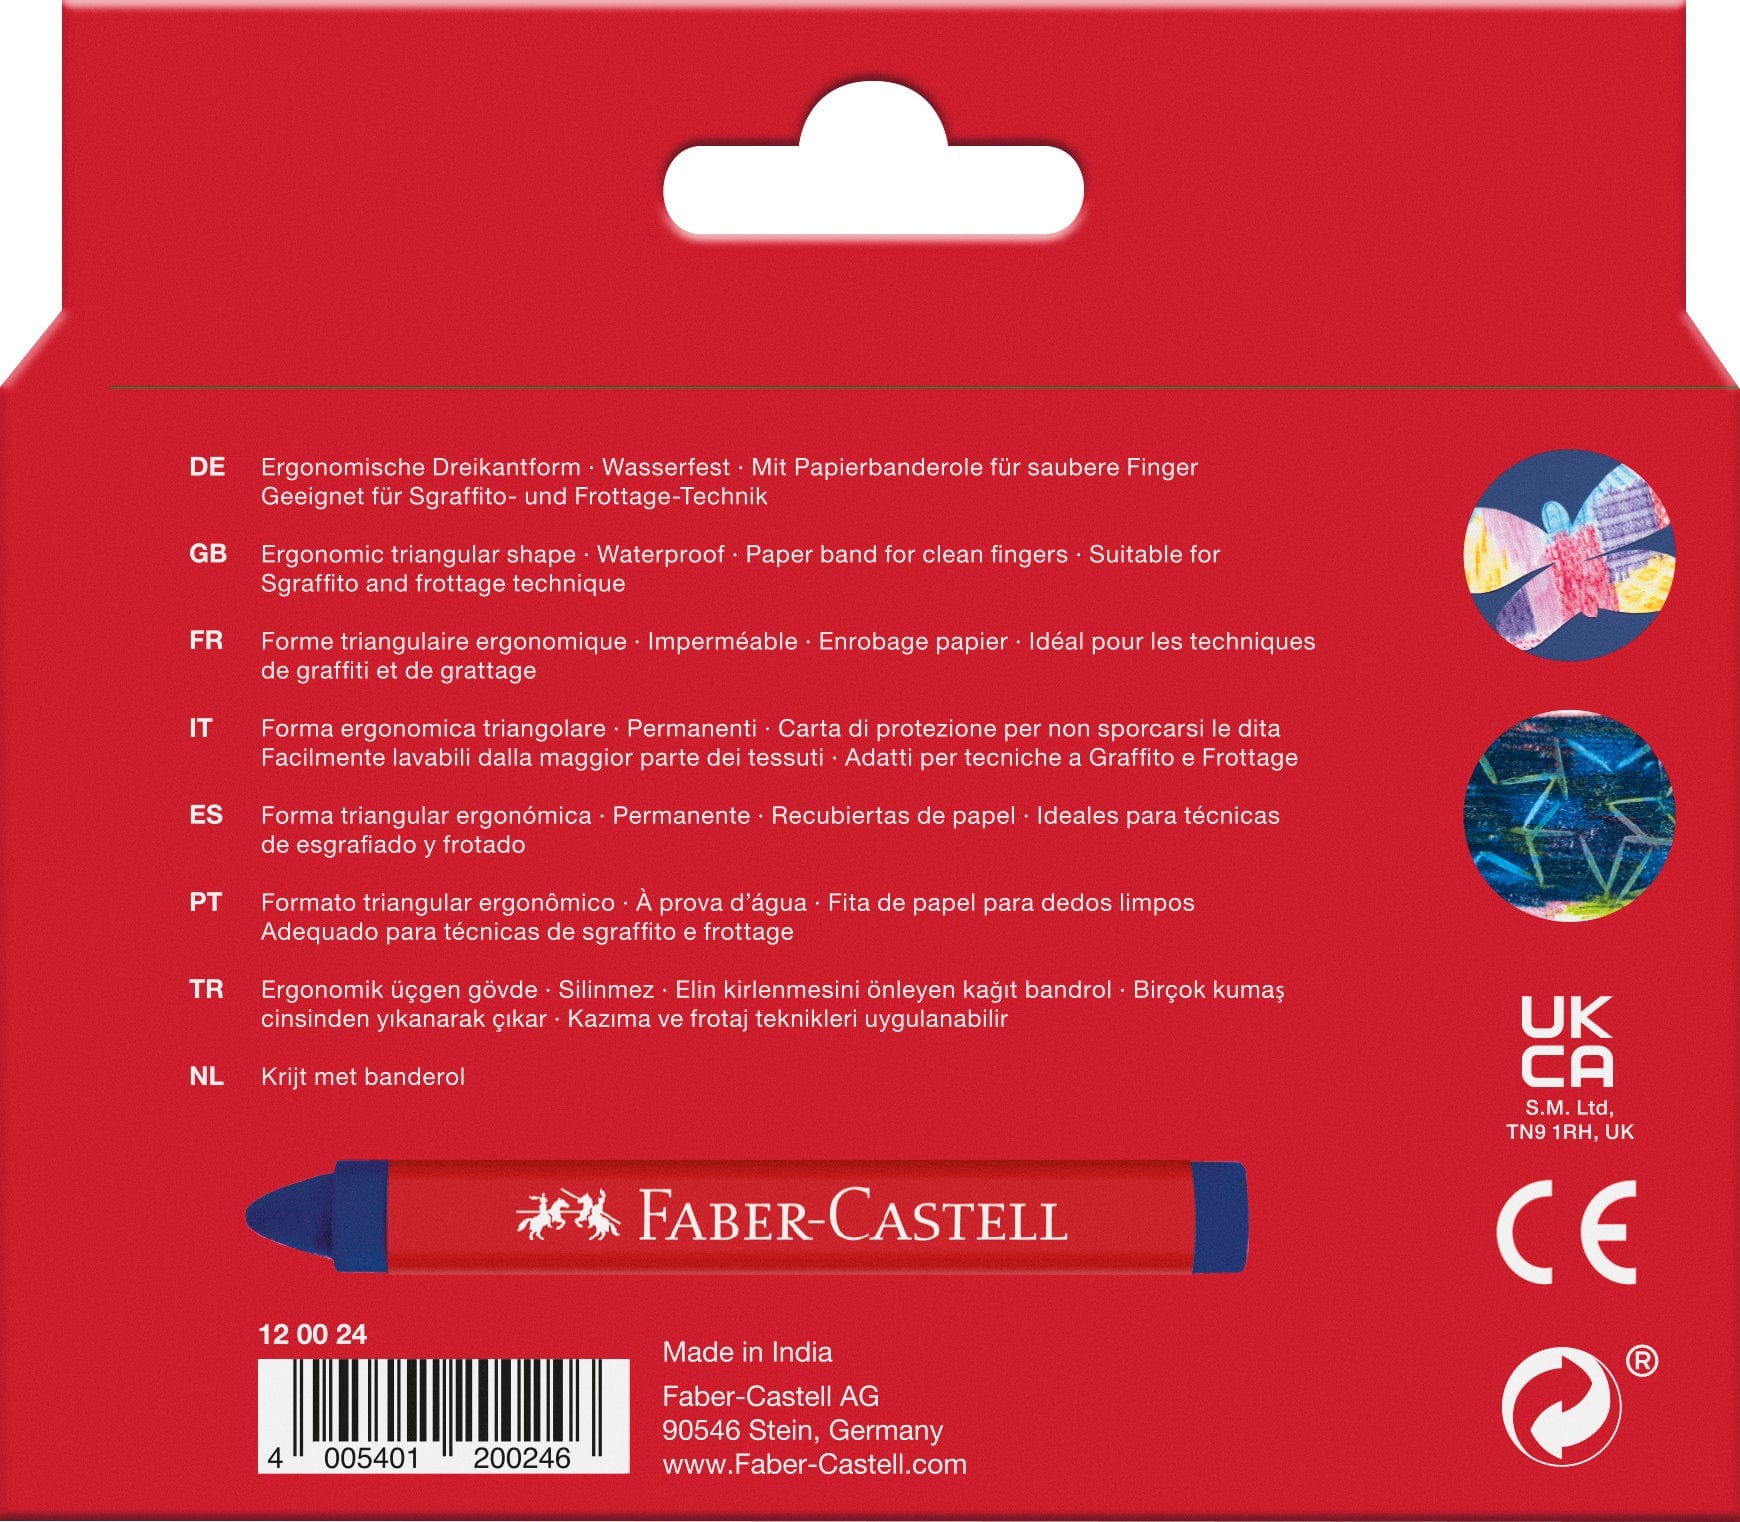 Faber-Castell Kridt Voks kridt trekantet - 24 farver